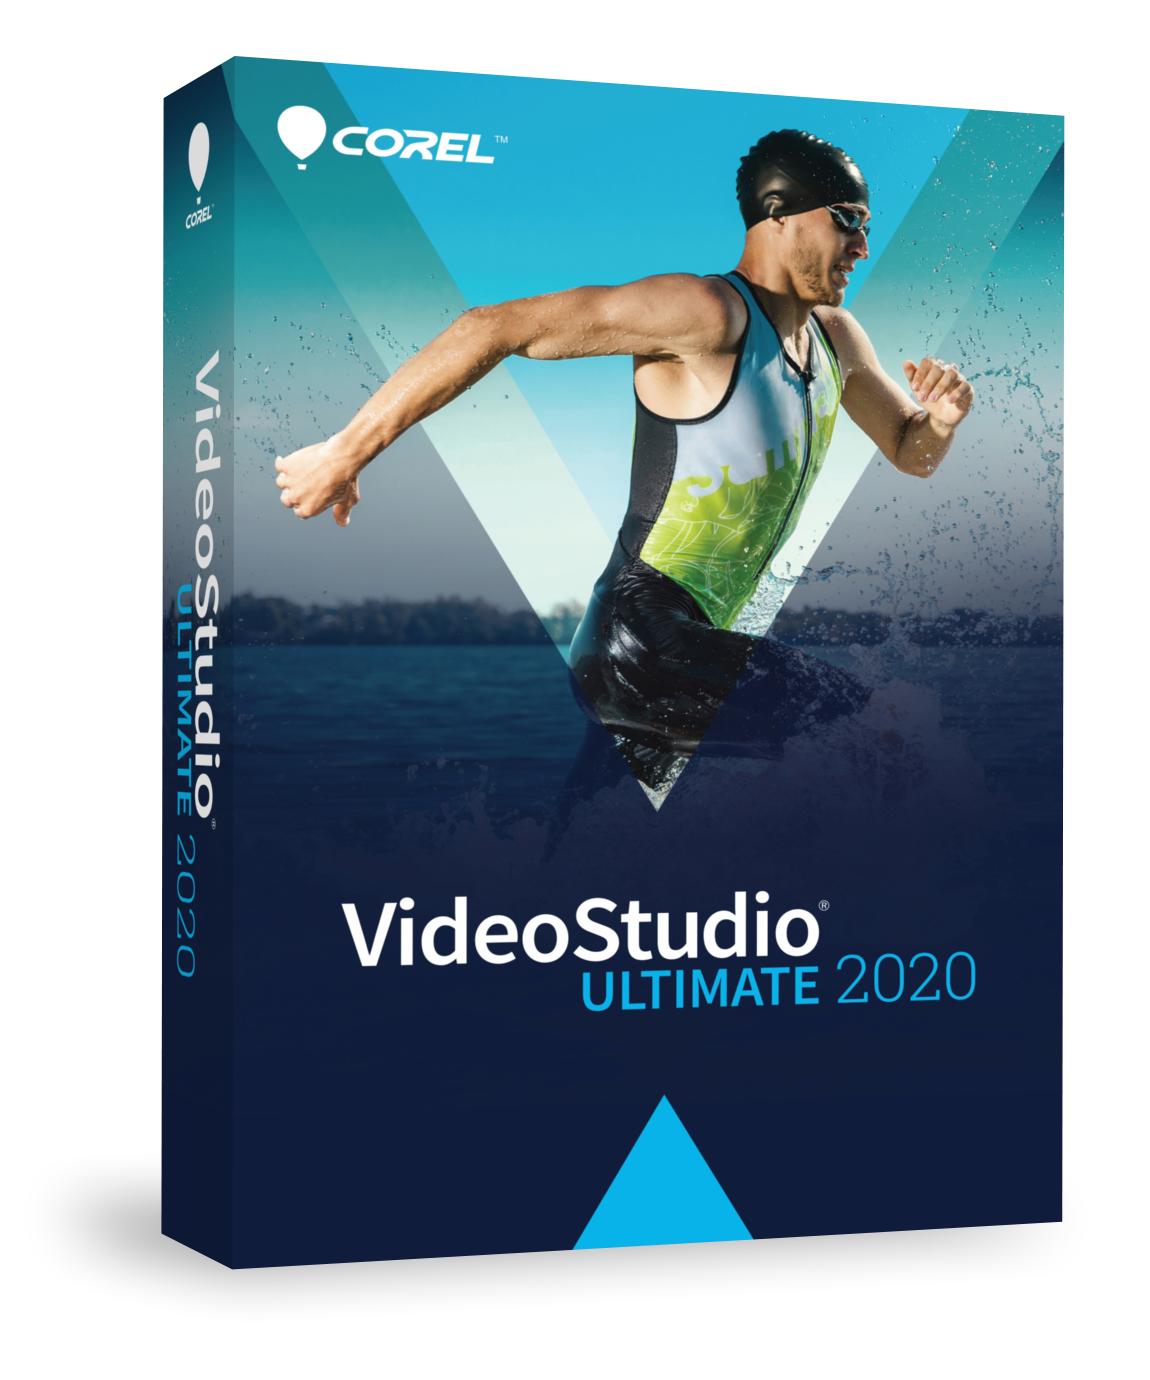 VideoStudio Pro 2020 - download in one click. Virus free.